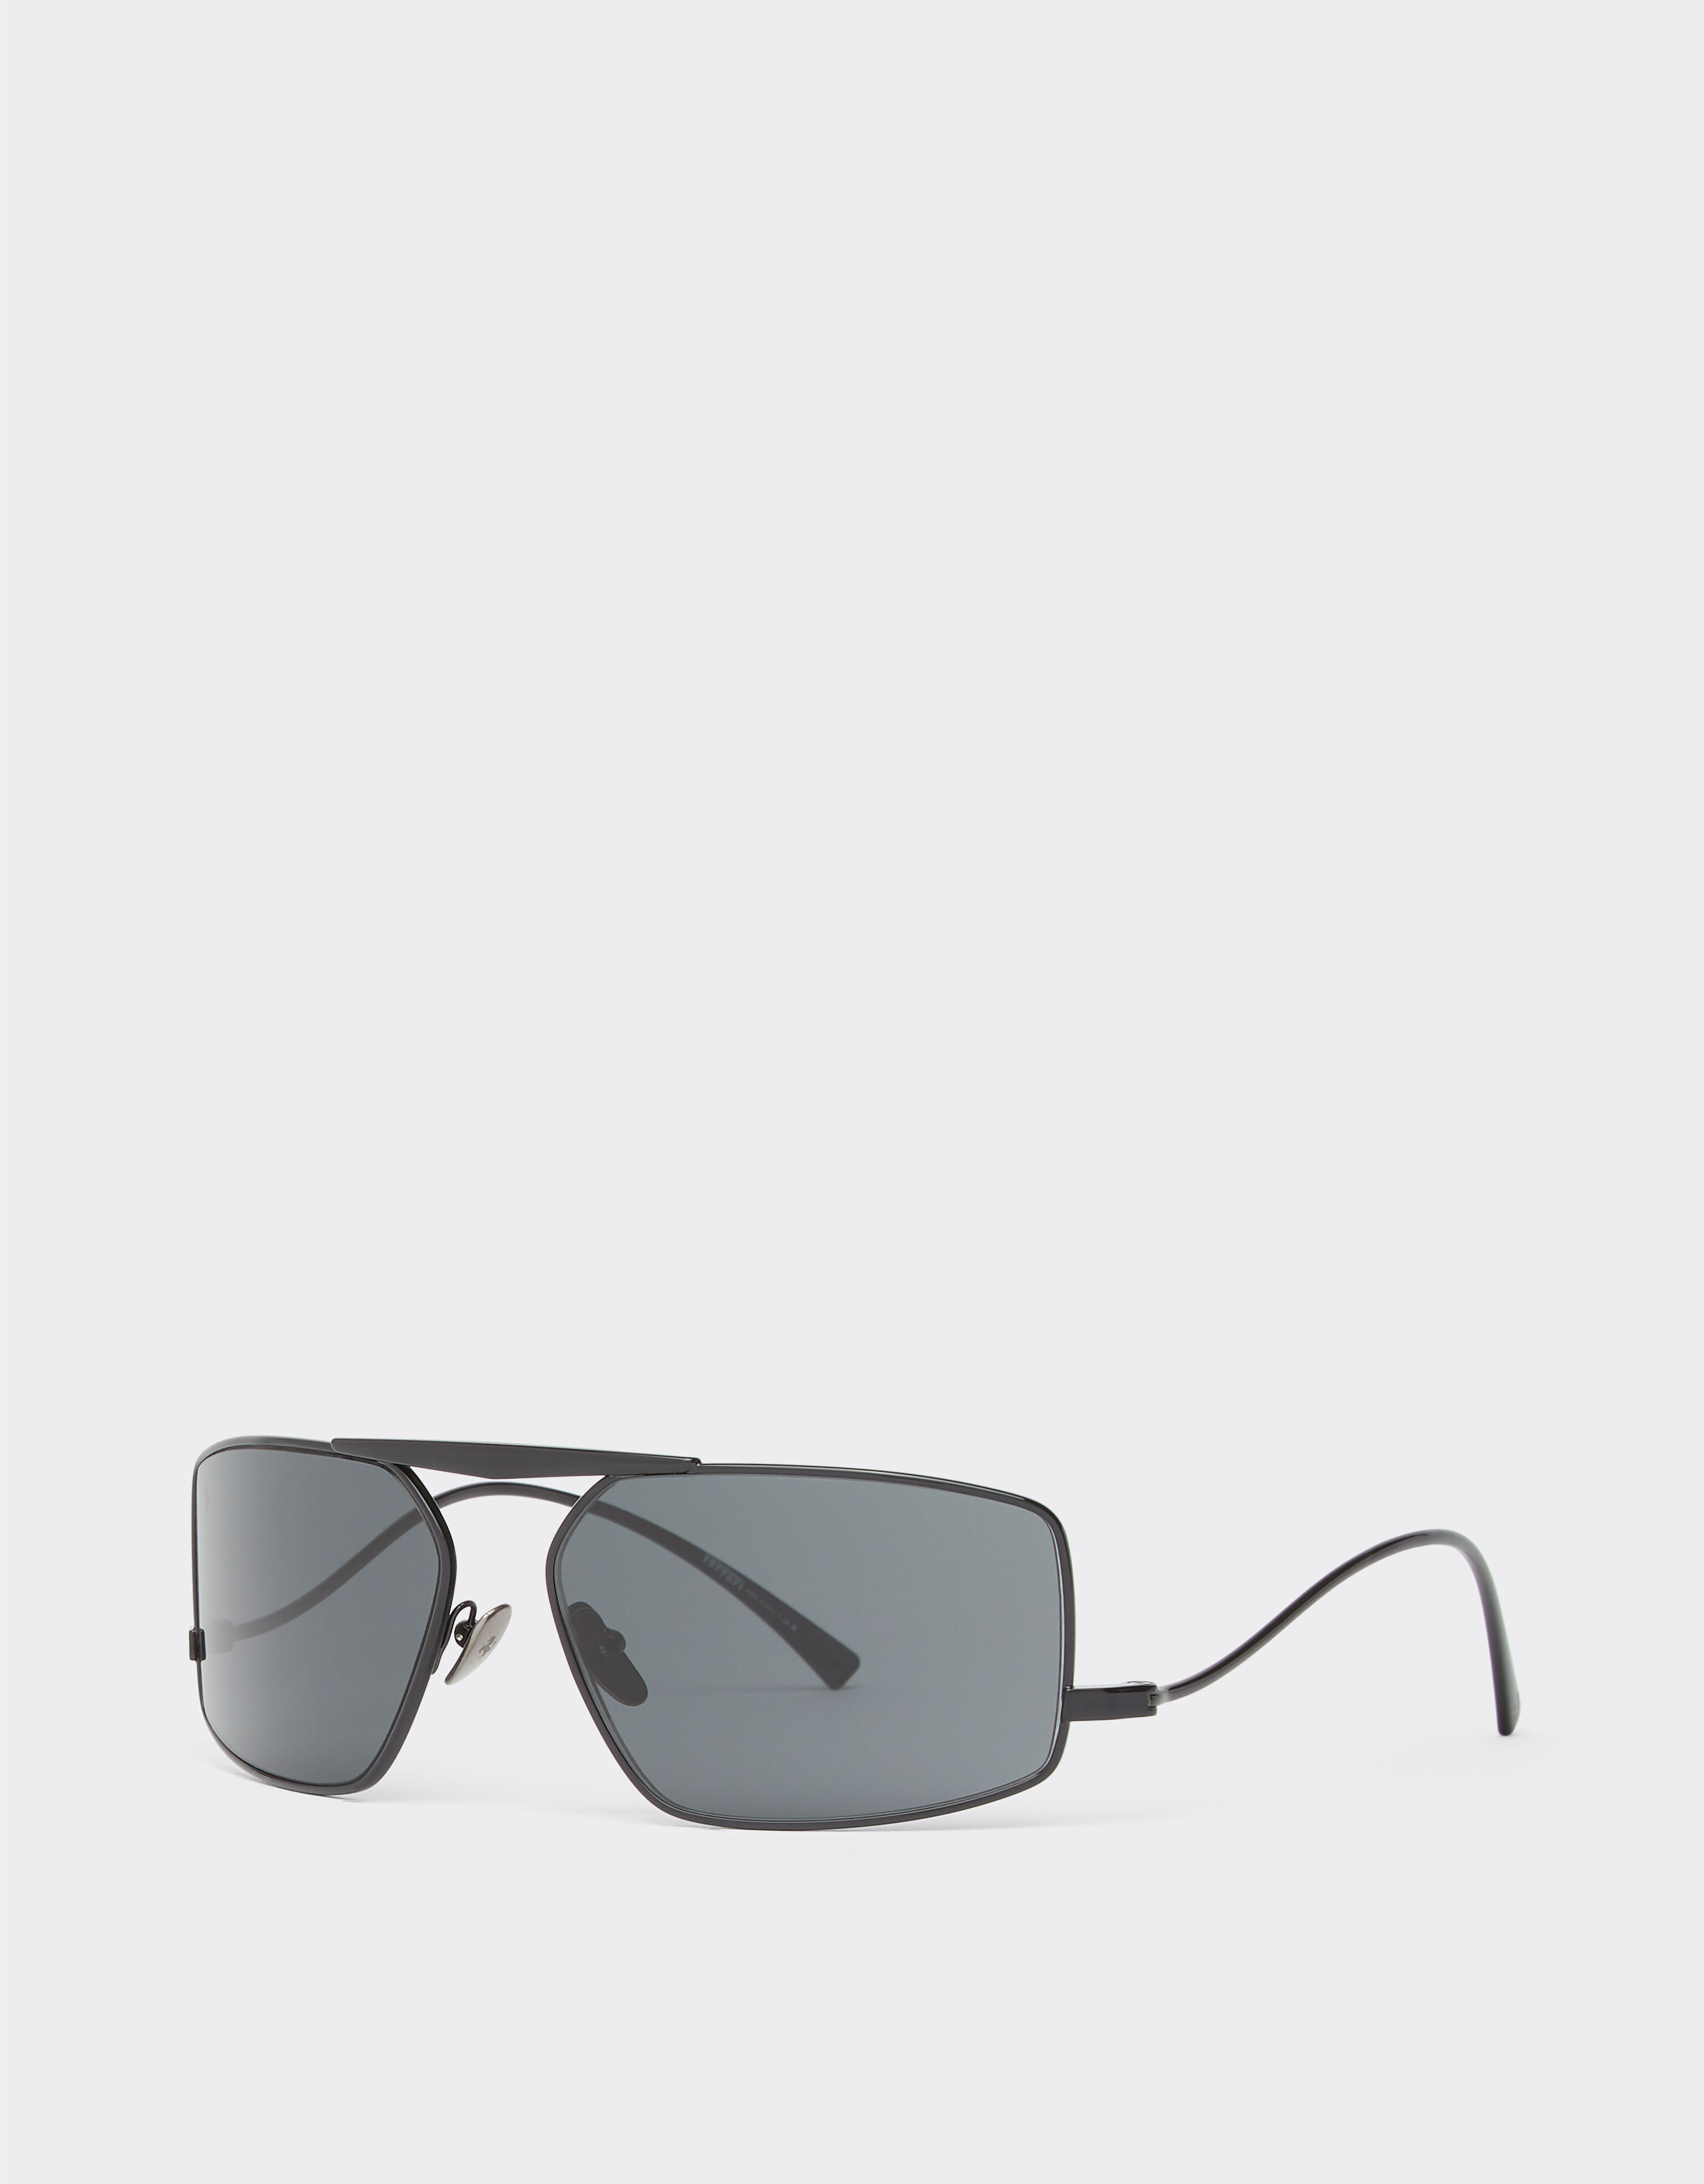 Ferrari Ferrari sunglasses in black metal with grey lenses Black F1211f